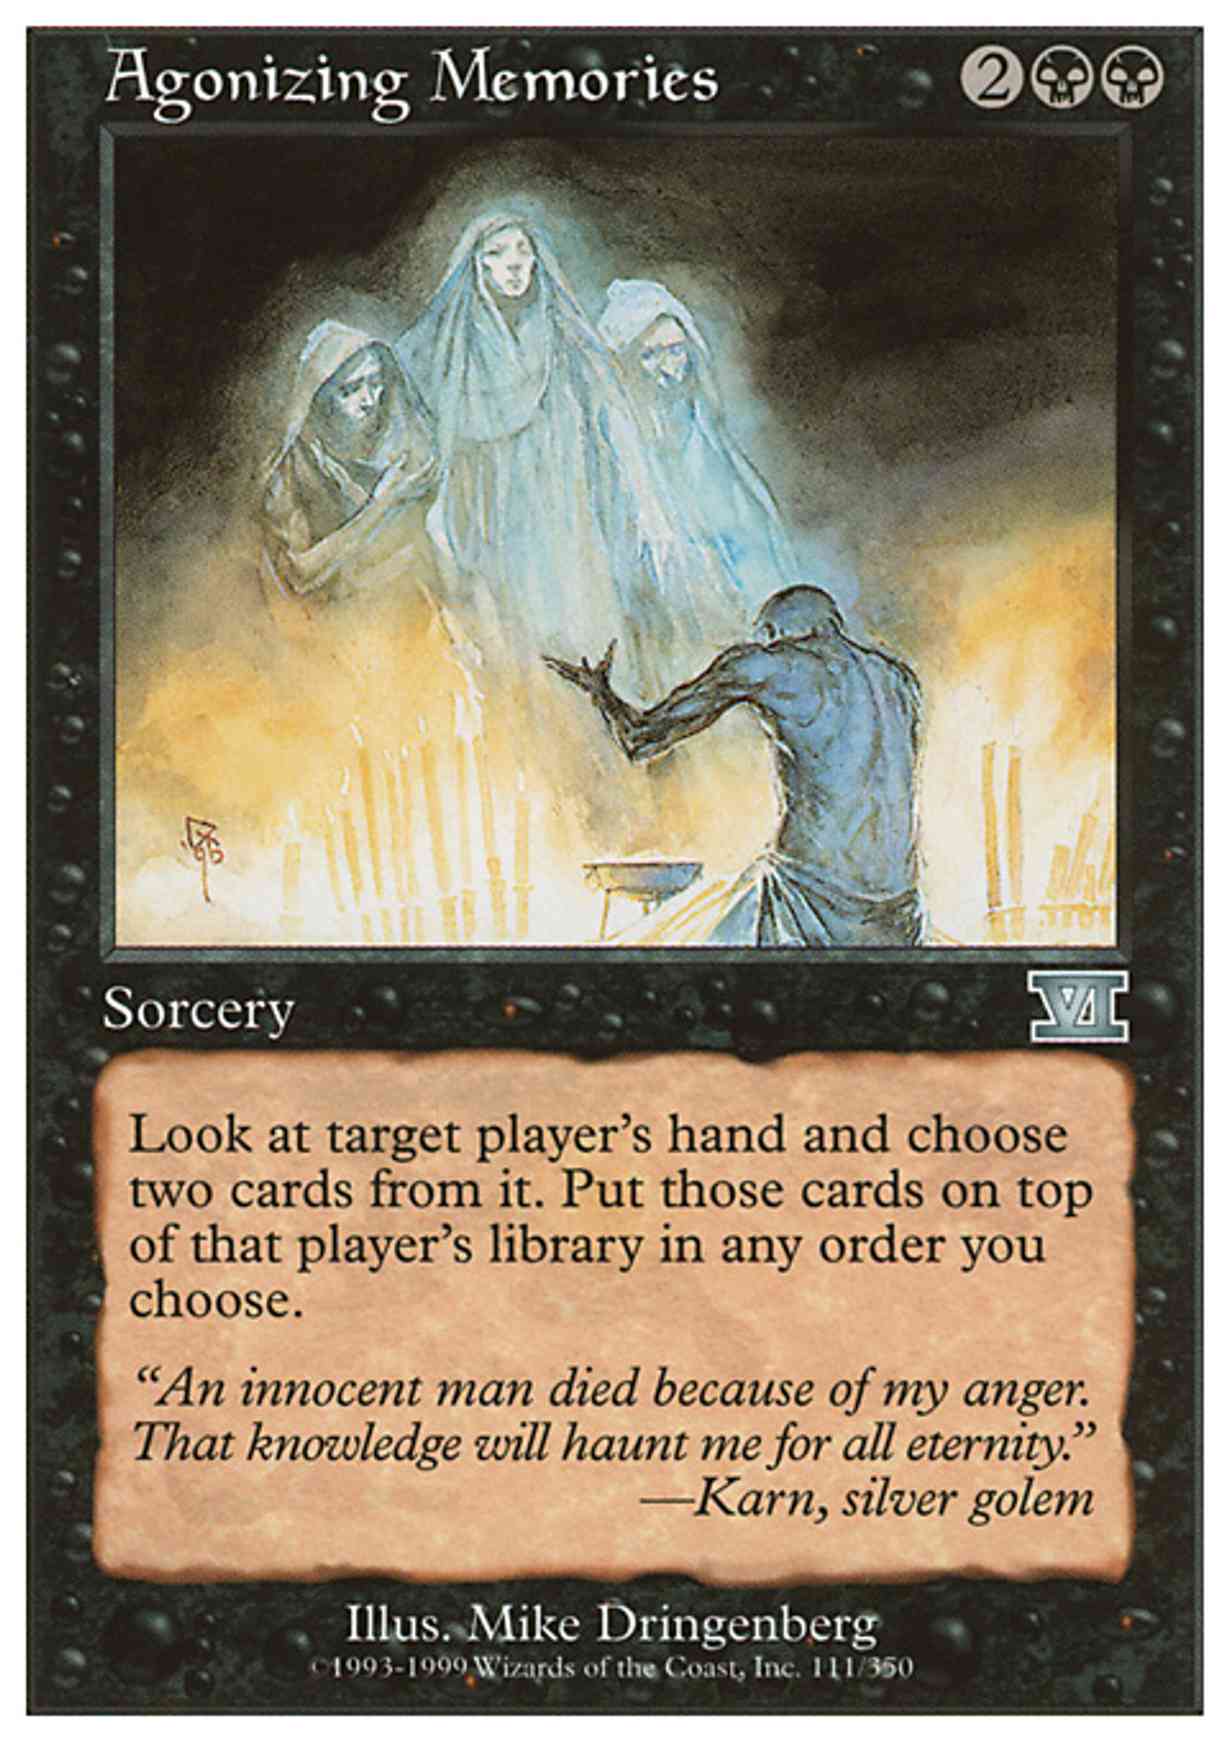 Agonizing Memories magic card front